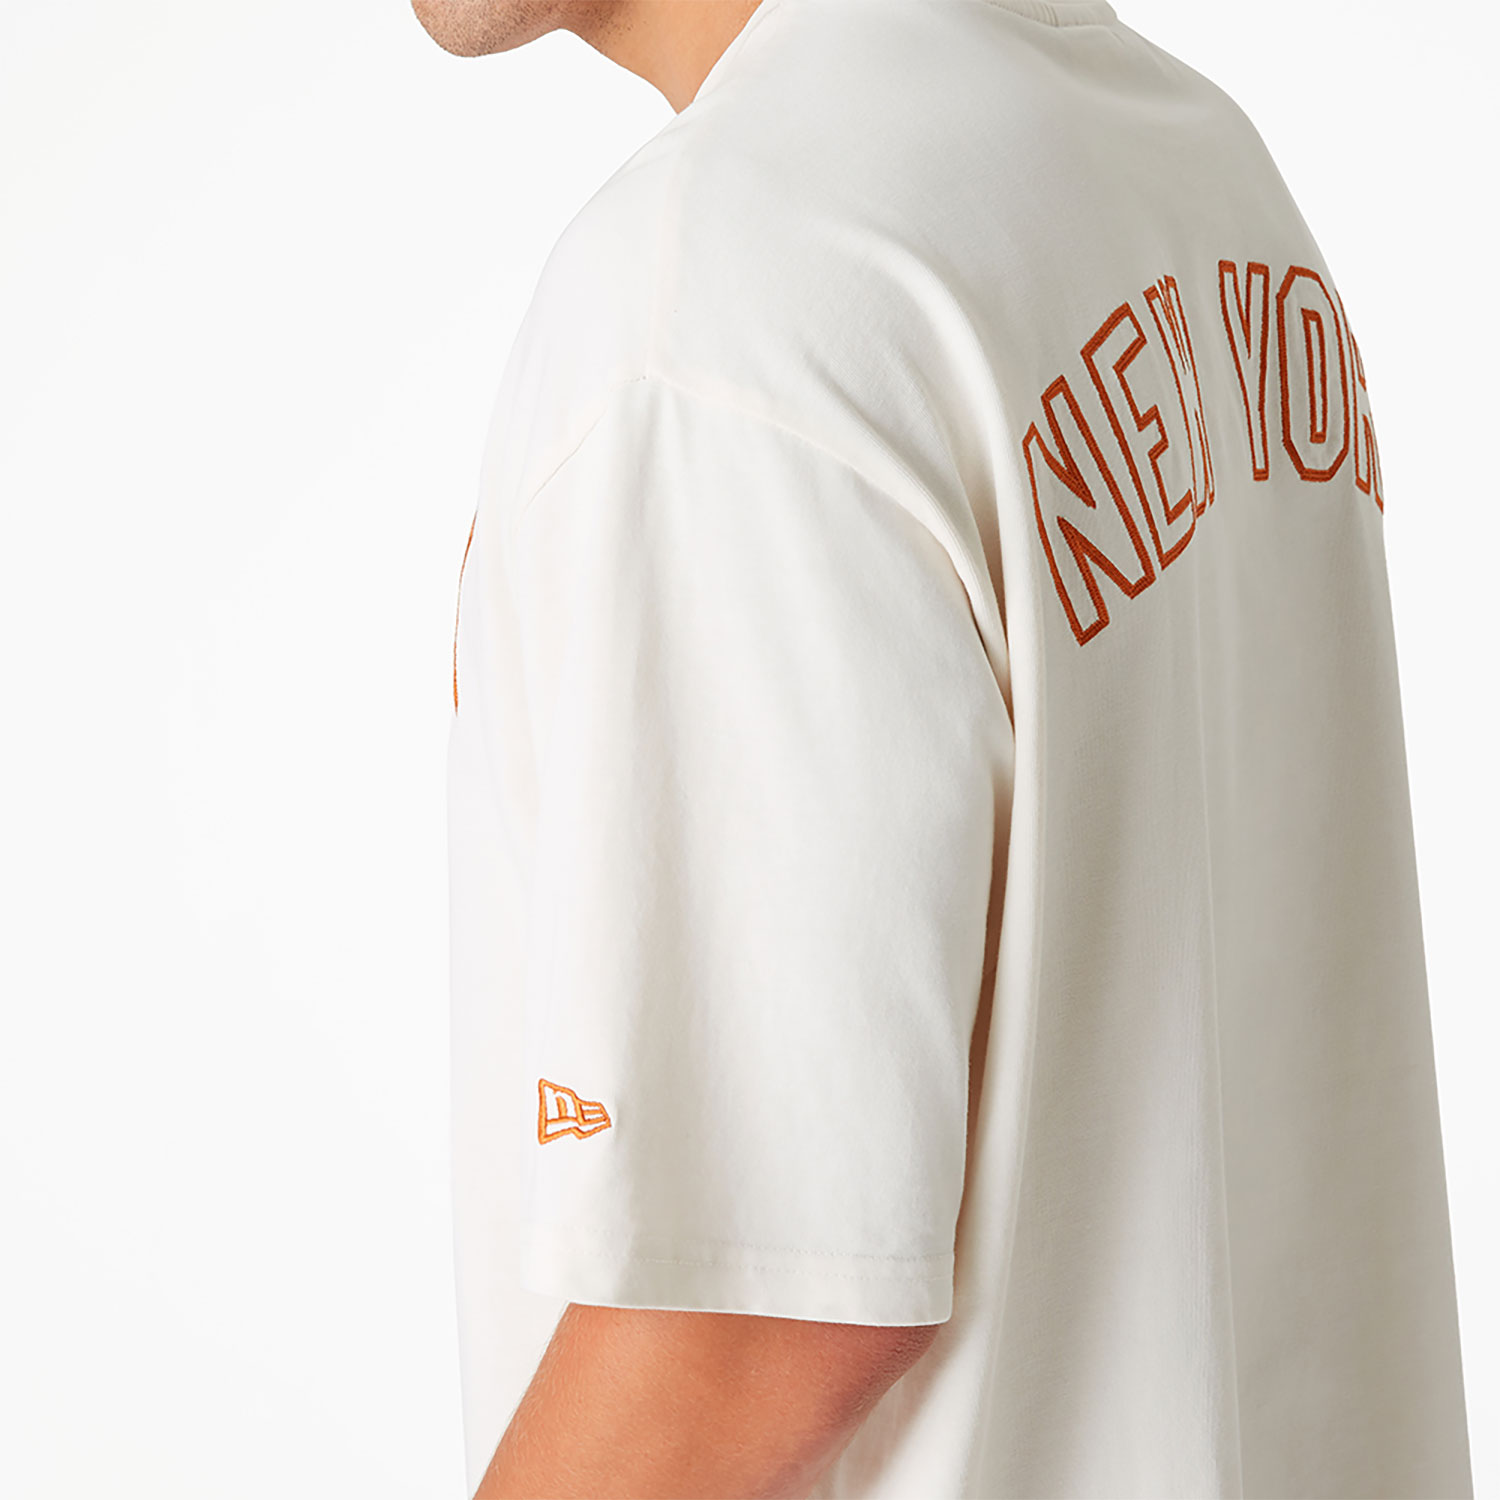 New York Yankees World Series Patch White Oversized T-Shirt